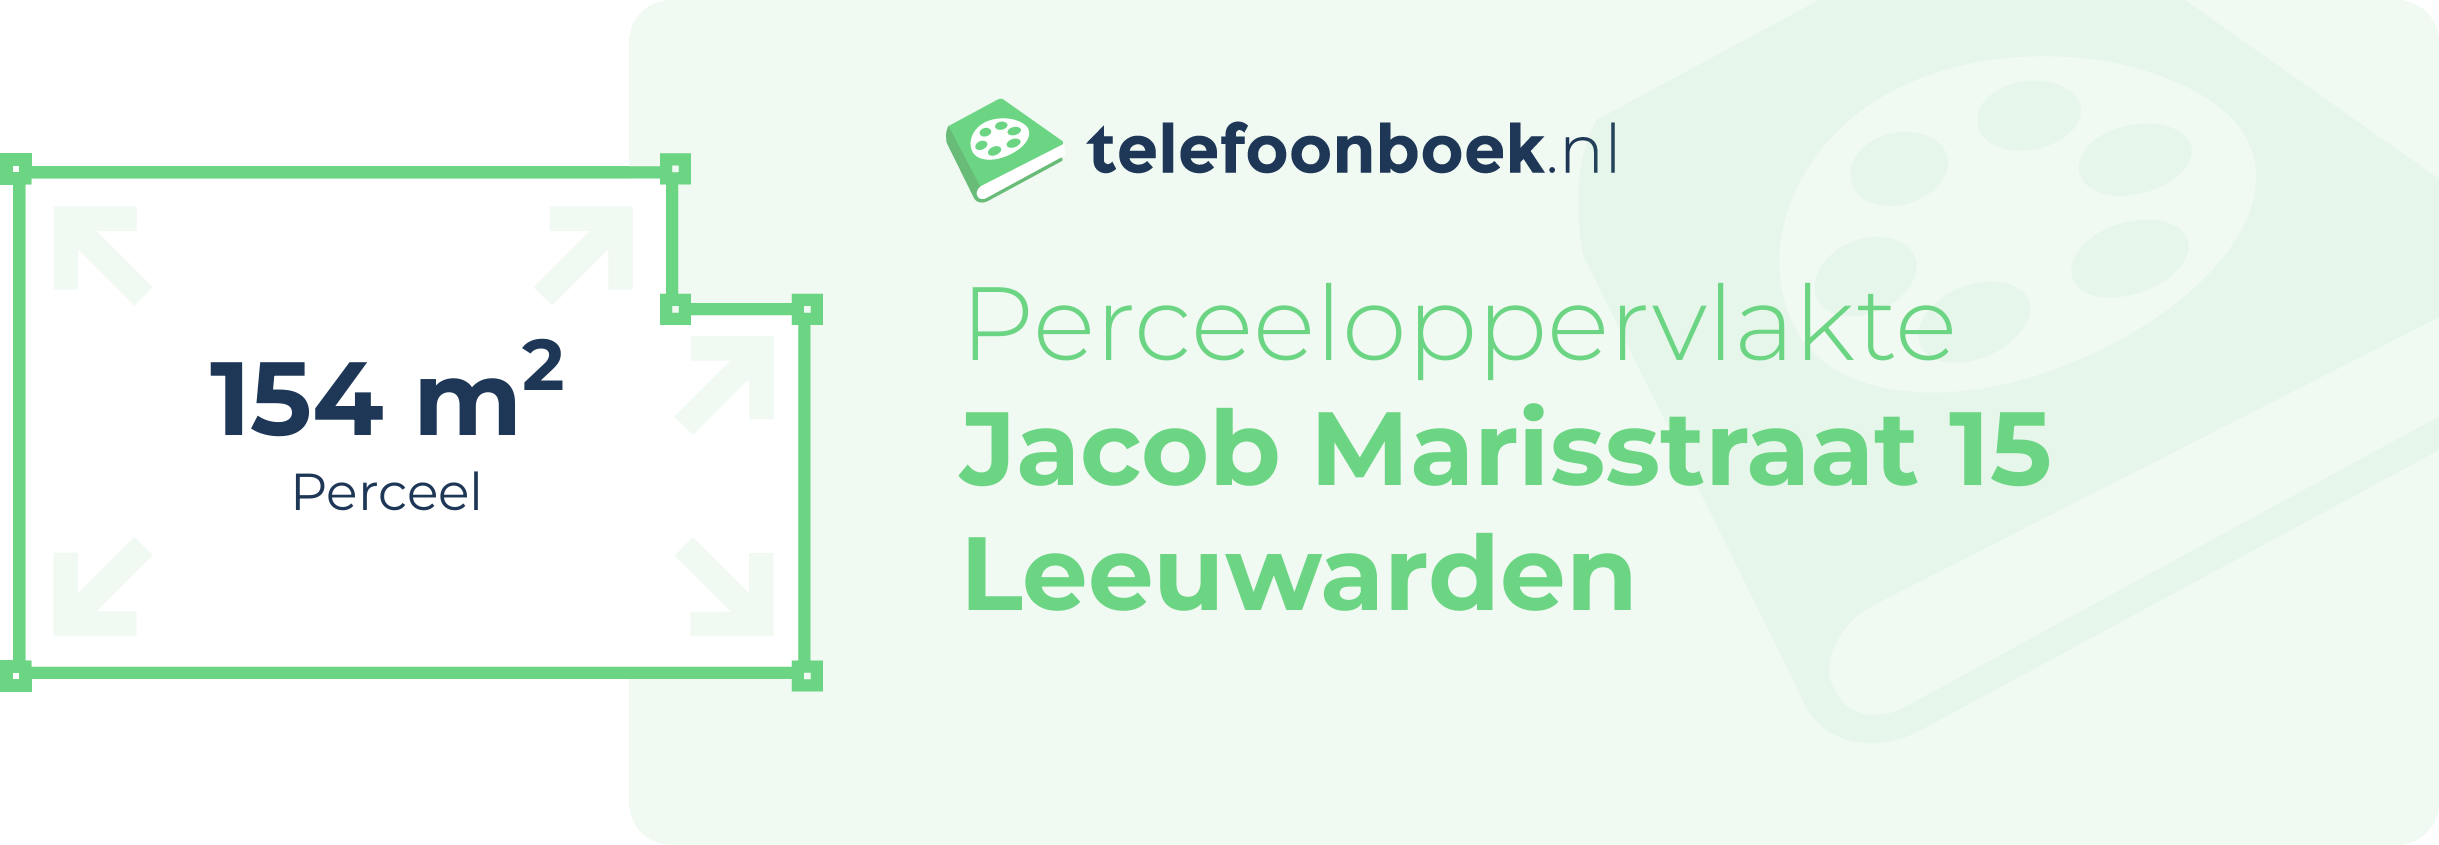 Perceeloppervlakte Jacob Marisstraat 15 Leeuwarden